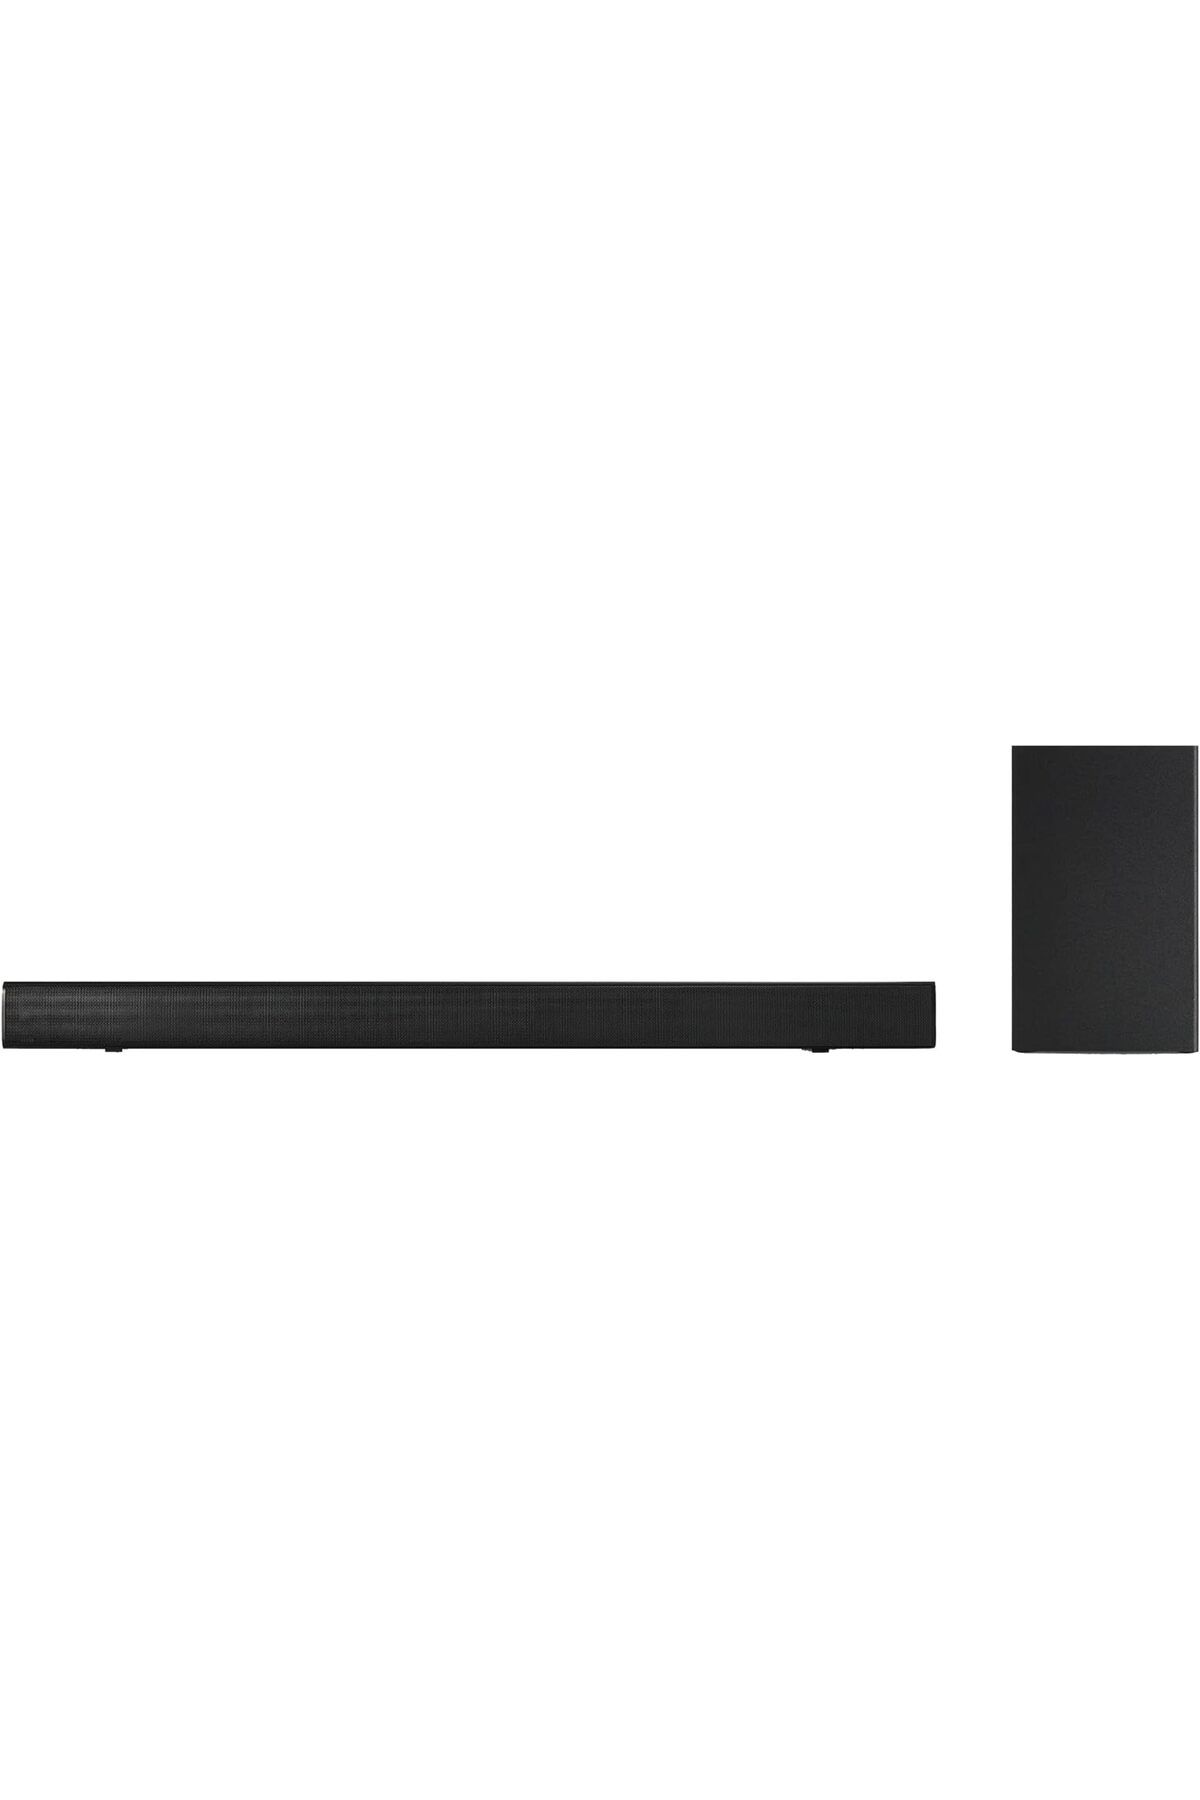 Panasonic SC-HTB150 Soundbar (kablosuz ve kablosuz subwoofer, 2.1 kanal, Soundbar hoparlör